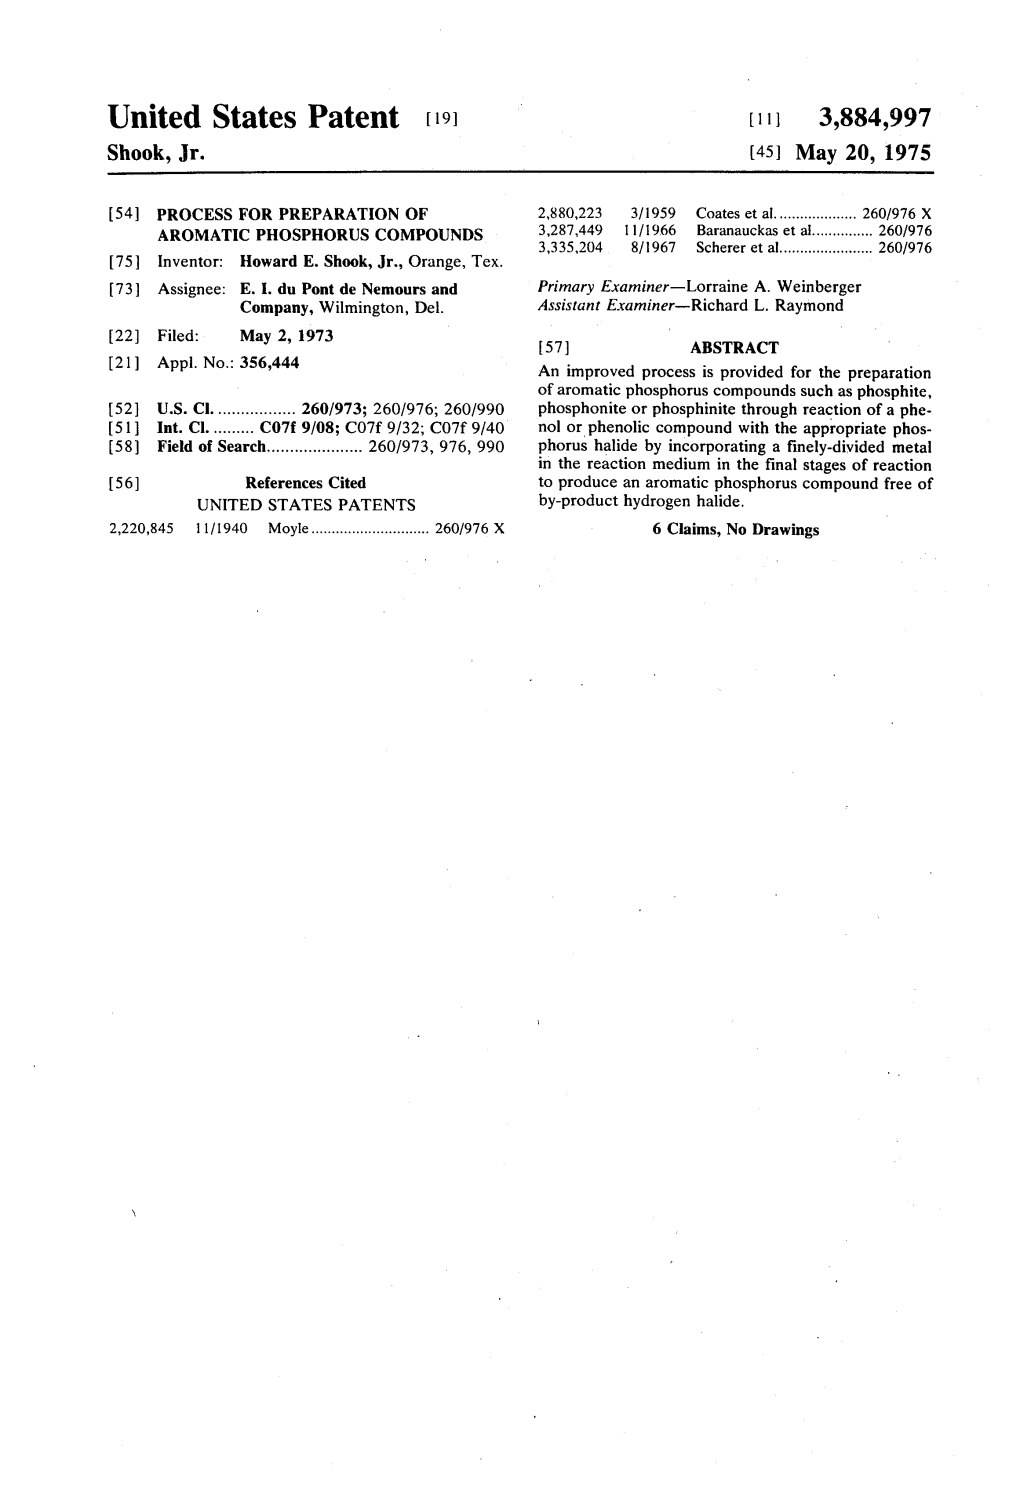 United States Patent (19) (11) 3,884,997 Shook, Jr